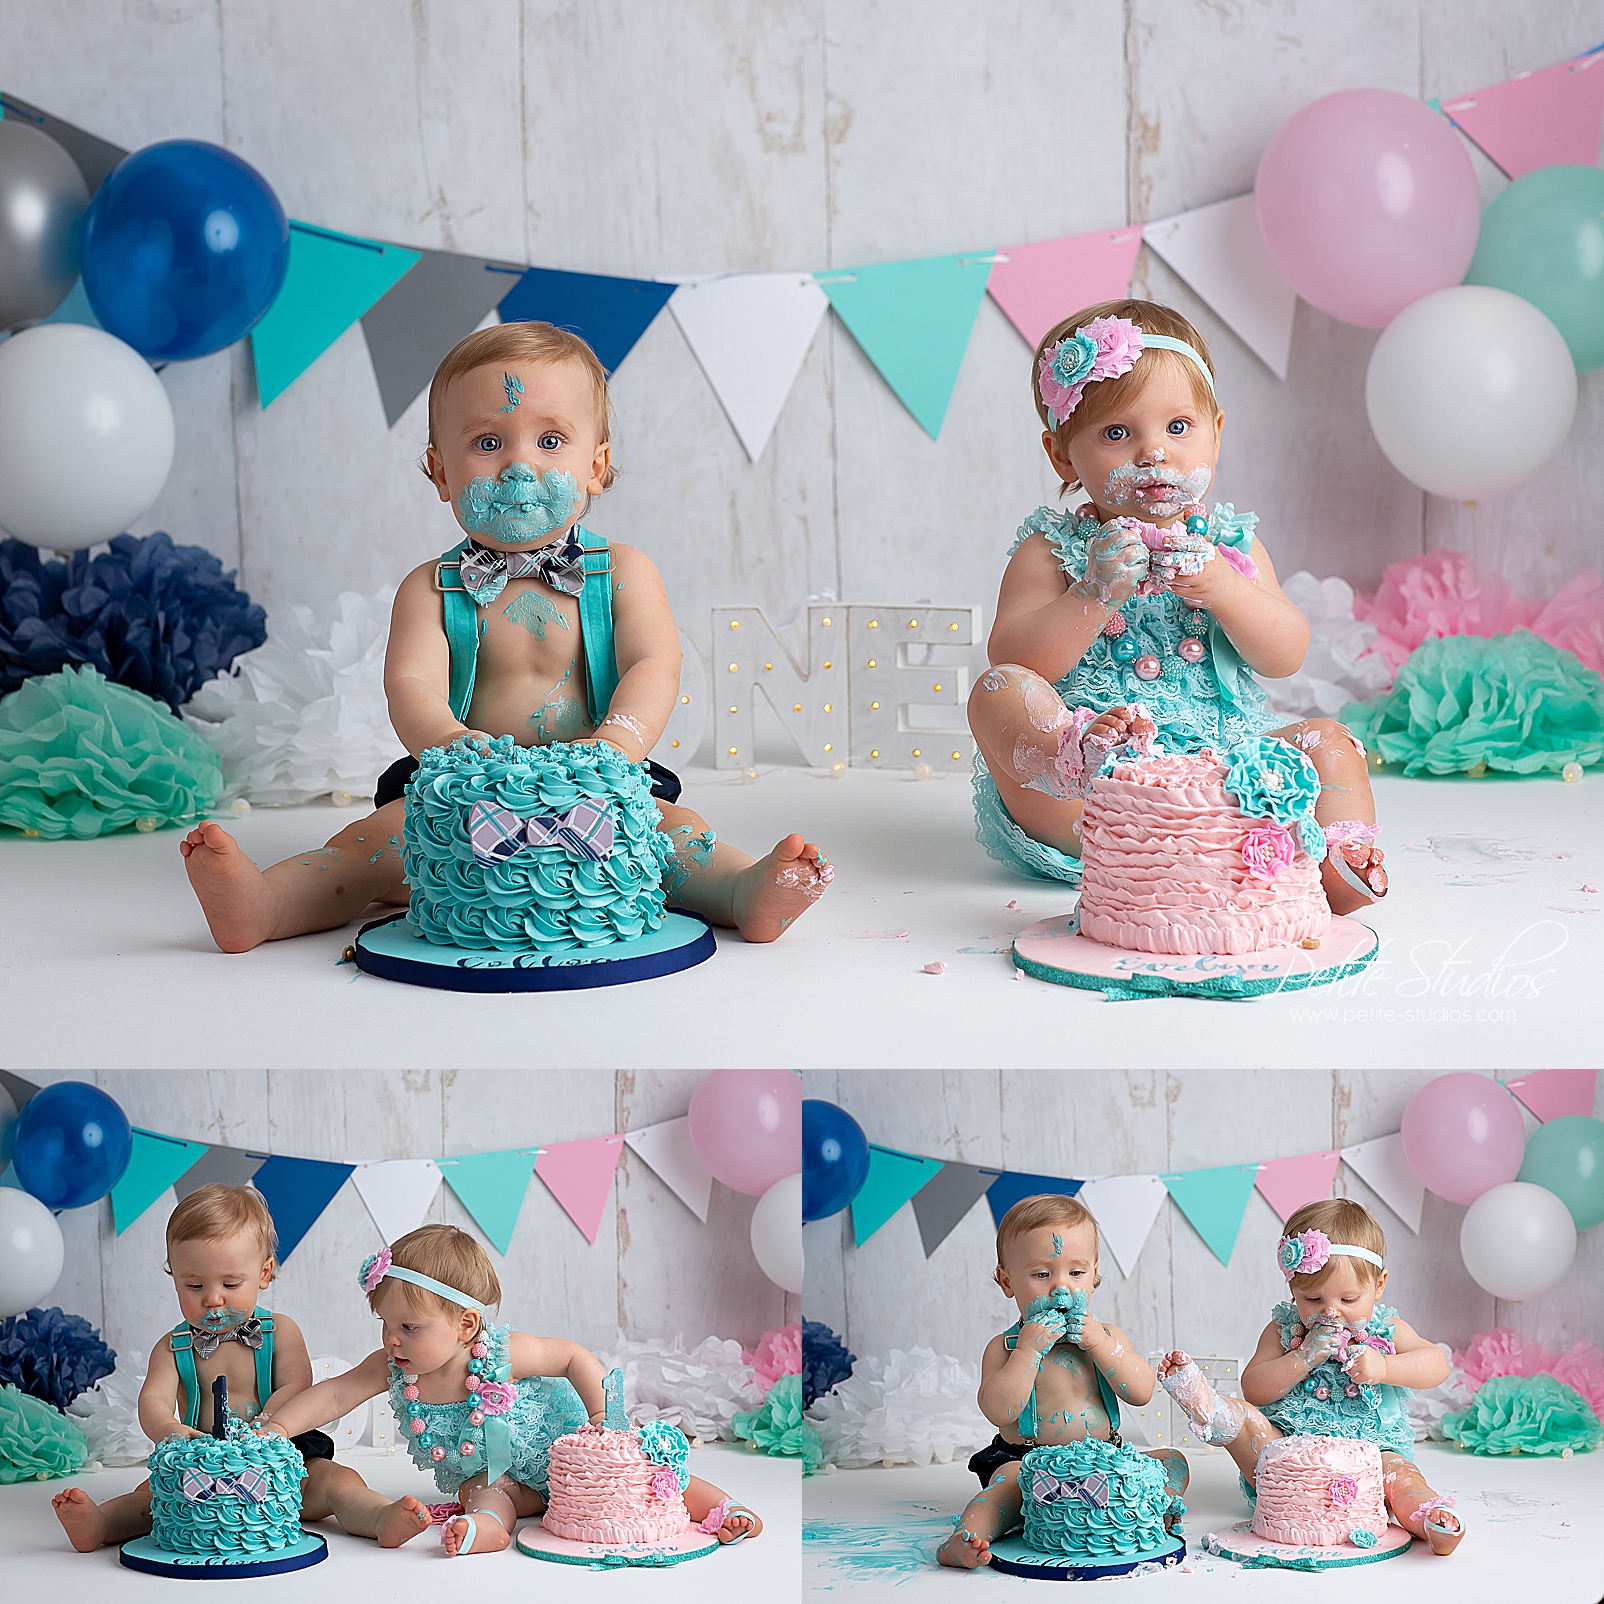 21+ Awesome Image of Twins Birthday Cake - davemelillo.com | Birthday cake  kids, Twin birthday cakes, Boy birthday cake